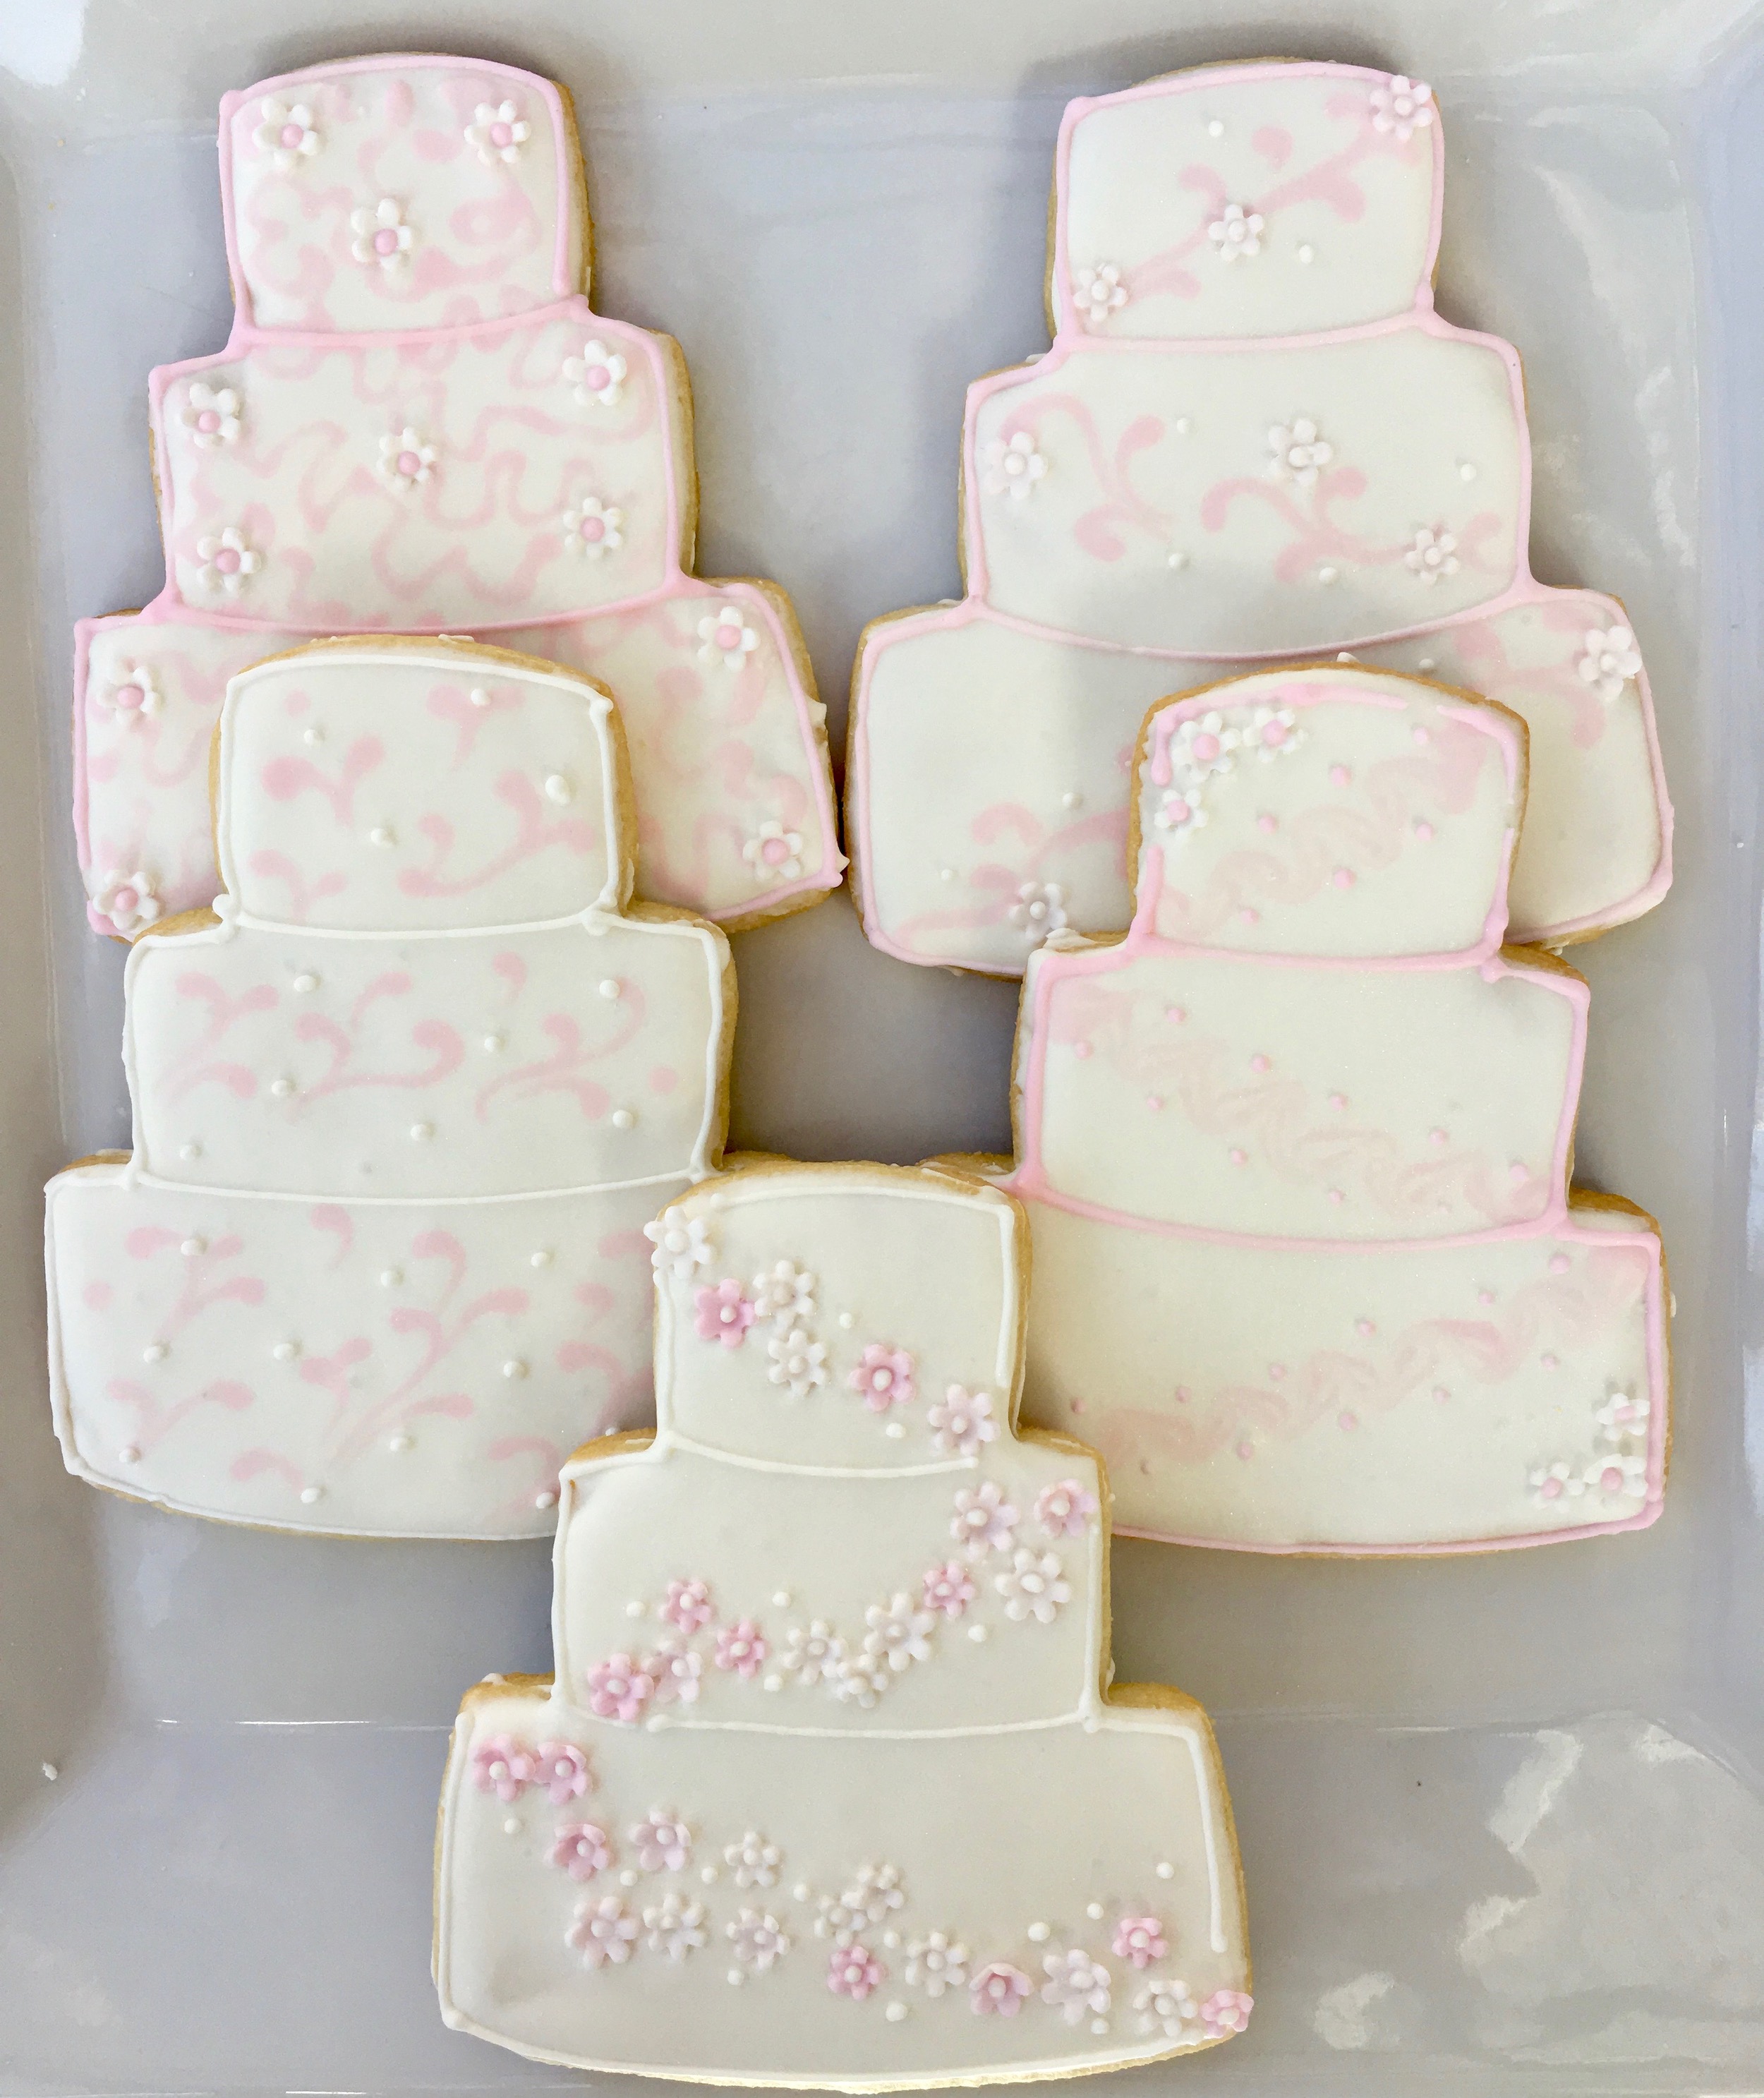 Wedding Cake Cookie - The Artful Baker